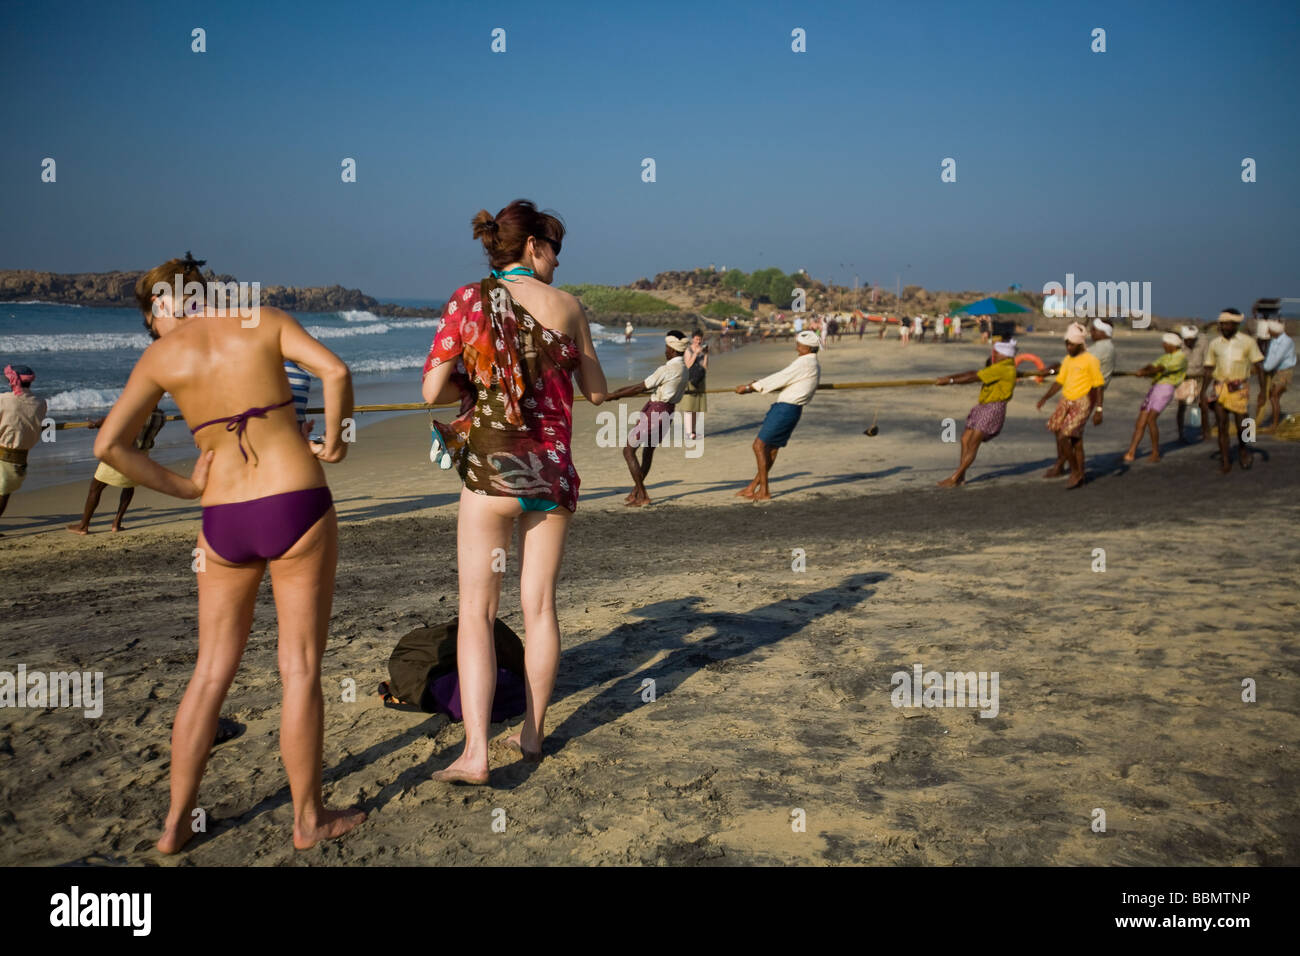 Bikini-clad European women tourists share the beach with traditional local Indian fishermen. Stock Photo